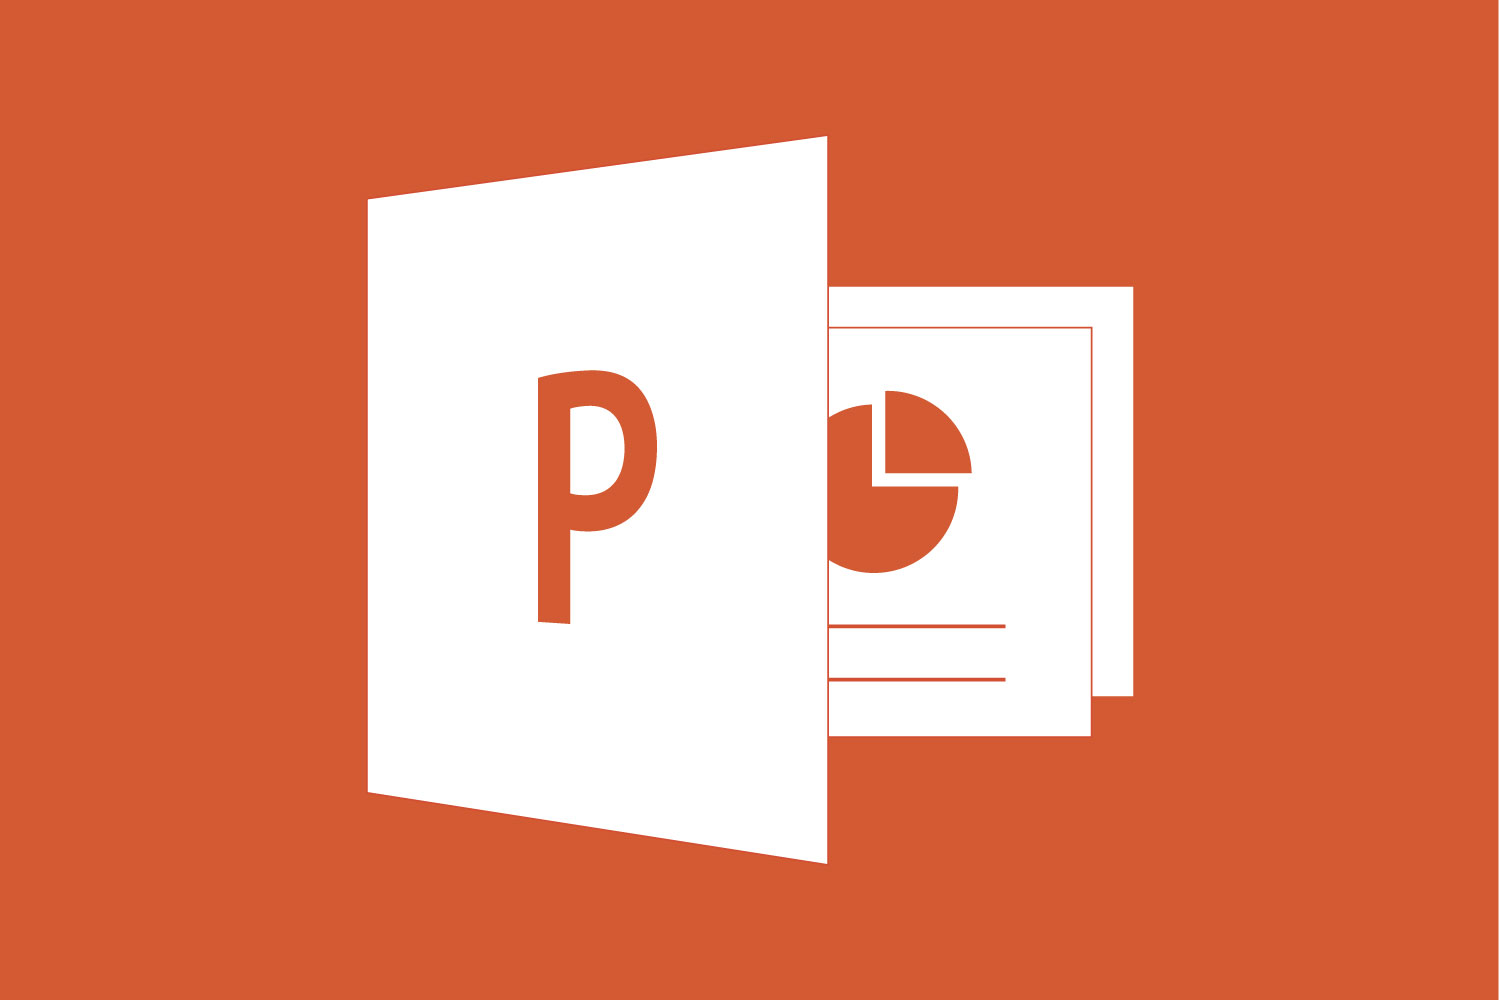 Microsoft Office PowerPoint 2010